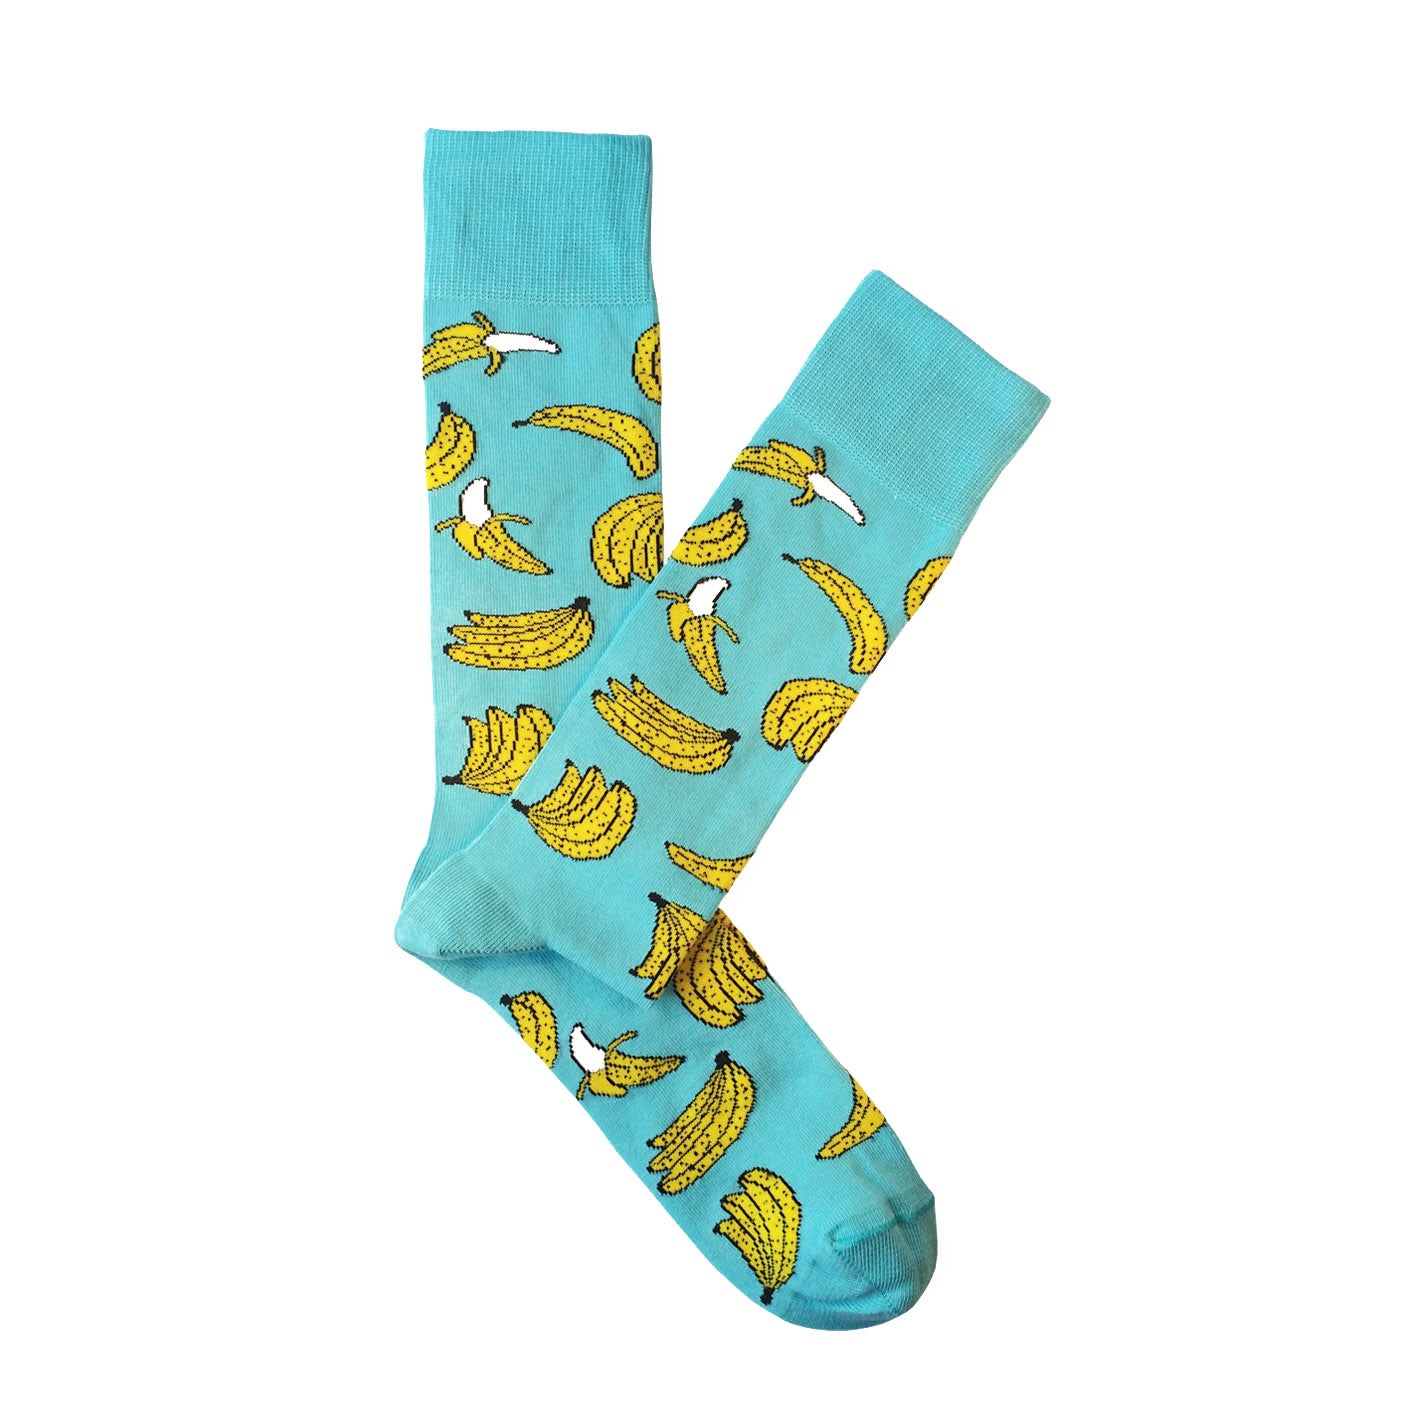 Giraffe Cool | Blue Yellow Bananas Brushed Cotton Socks Open